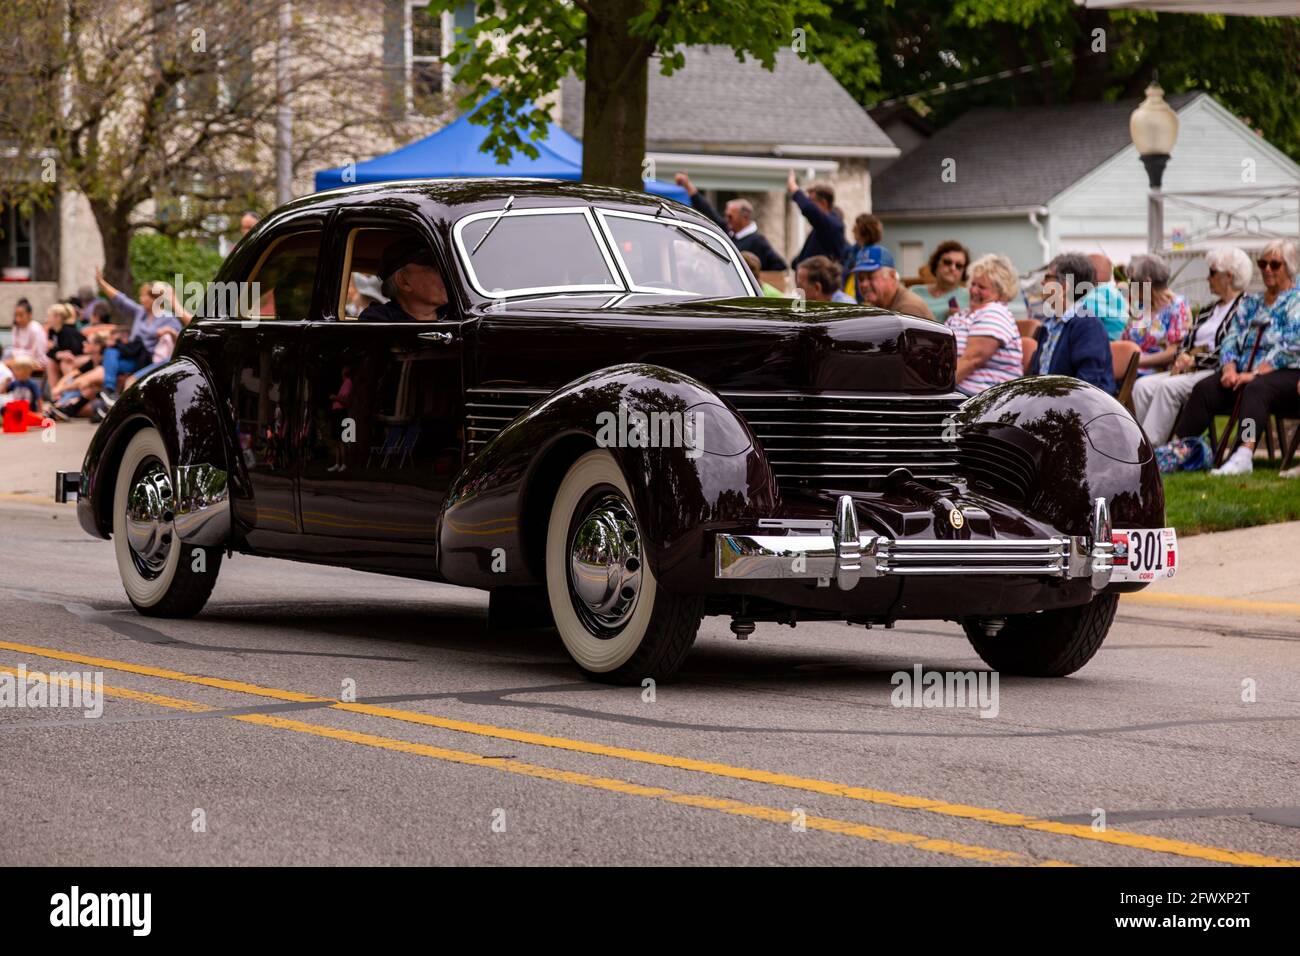 An antique Cord sedan classic automobile cruises through Auburn, Indiana as part of the 2019 Auburn Cord Duesenberg Festival Parade. Stock Photo